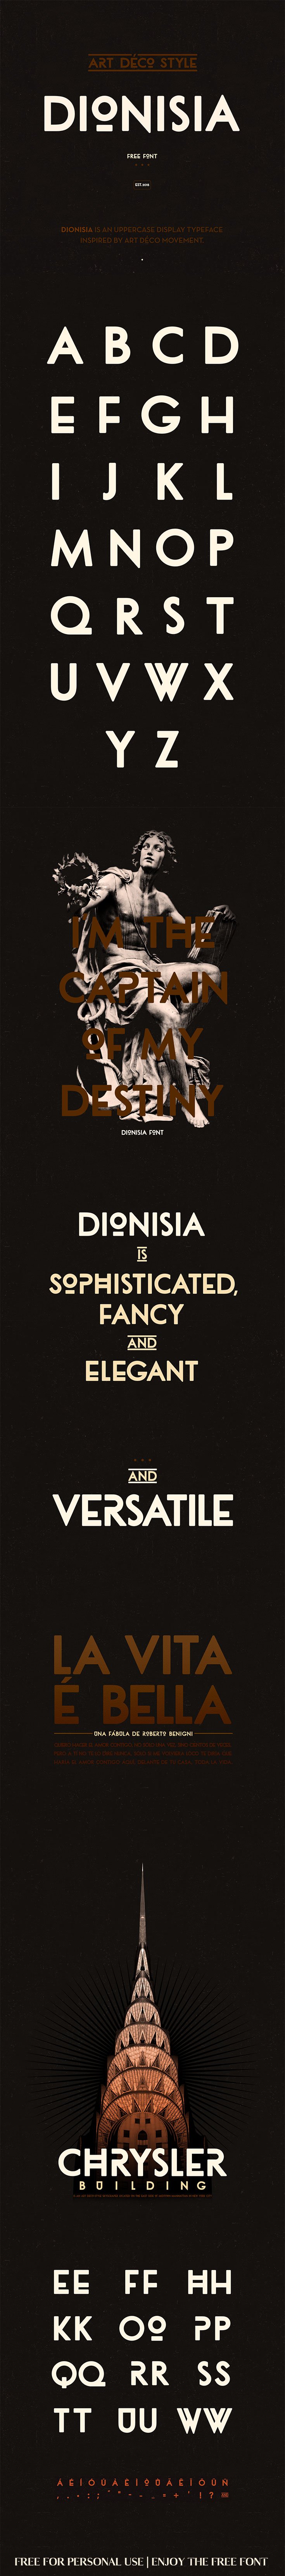 Free Dionisia Font